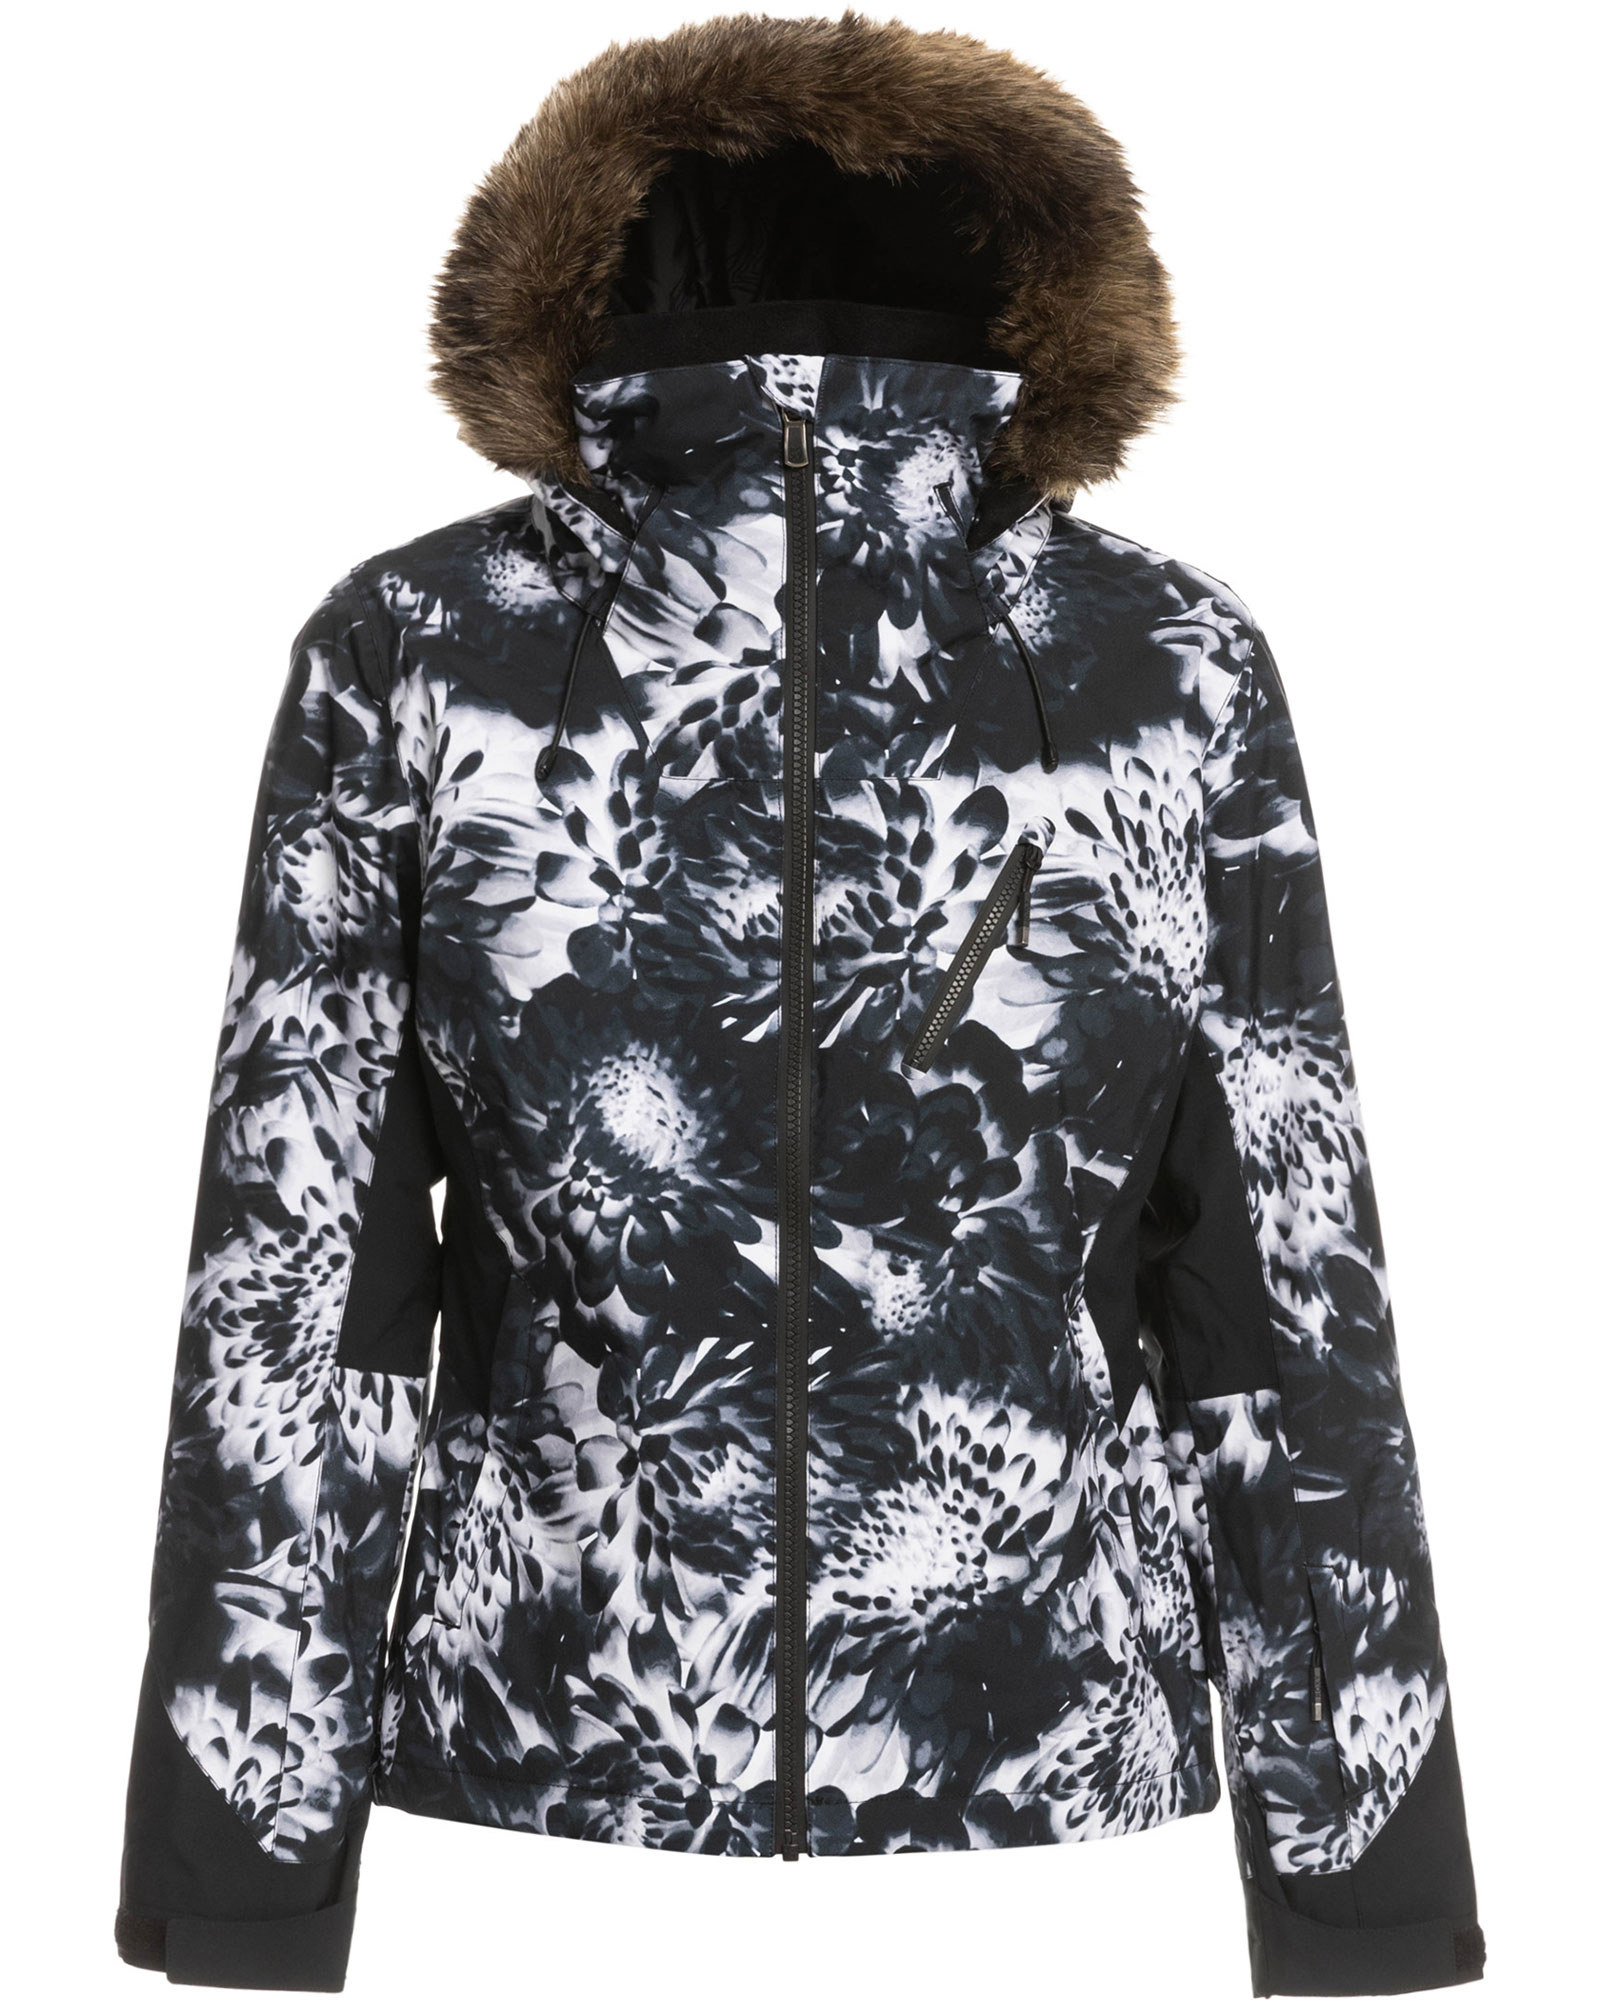 Roxy Jet Ski Premium Women’s Jacket - True Black Future Flower Print S